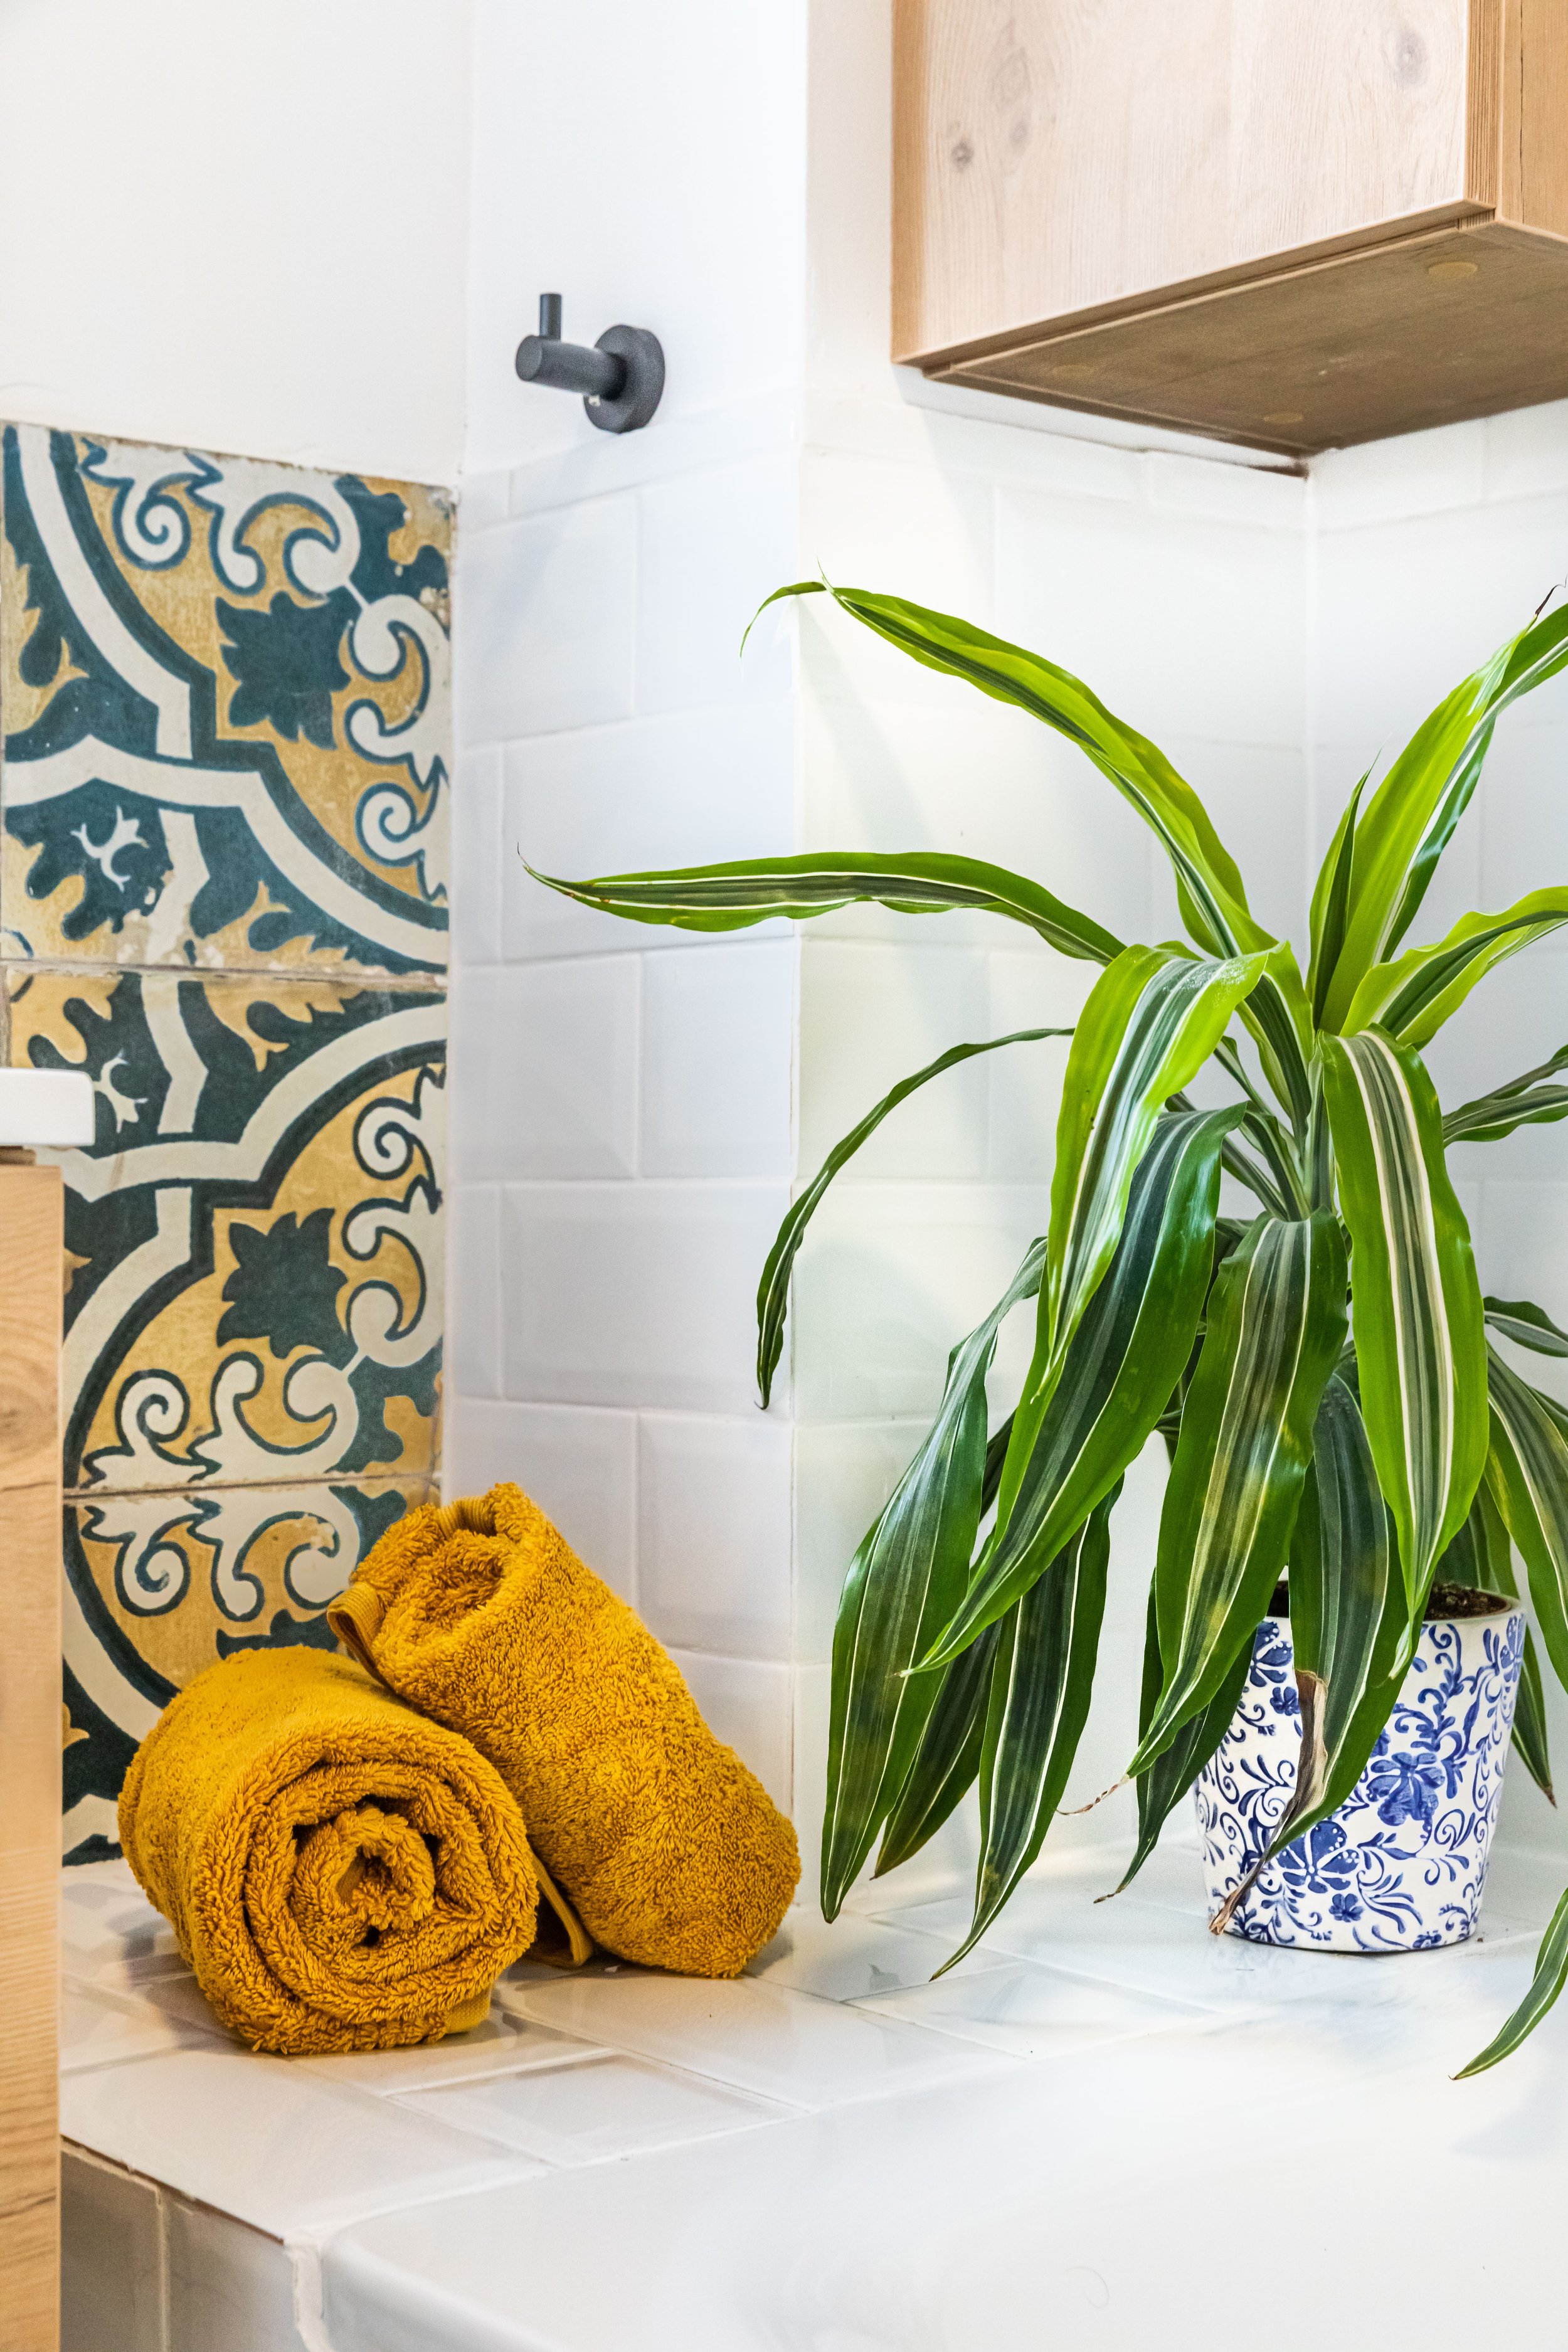 Mustard yellow bathroom towels and green plant.jpg